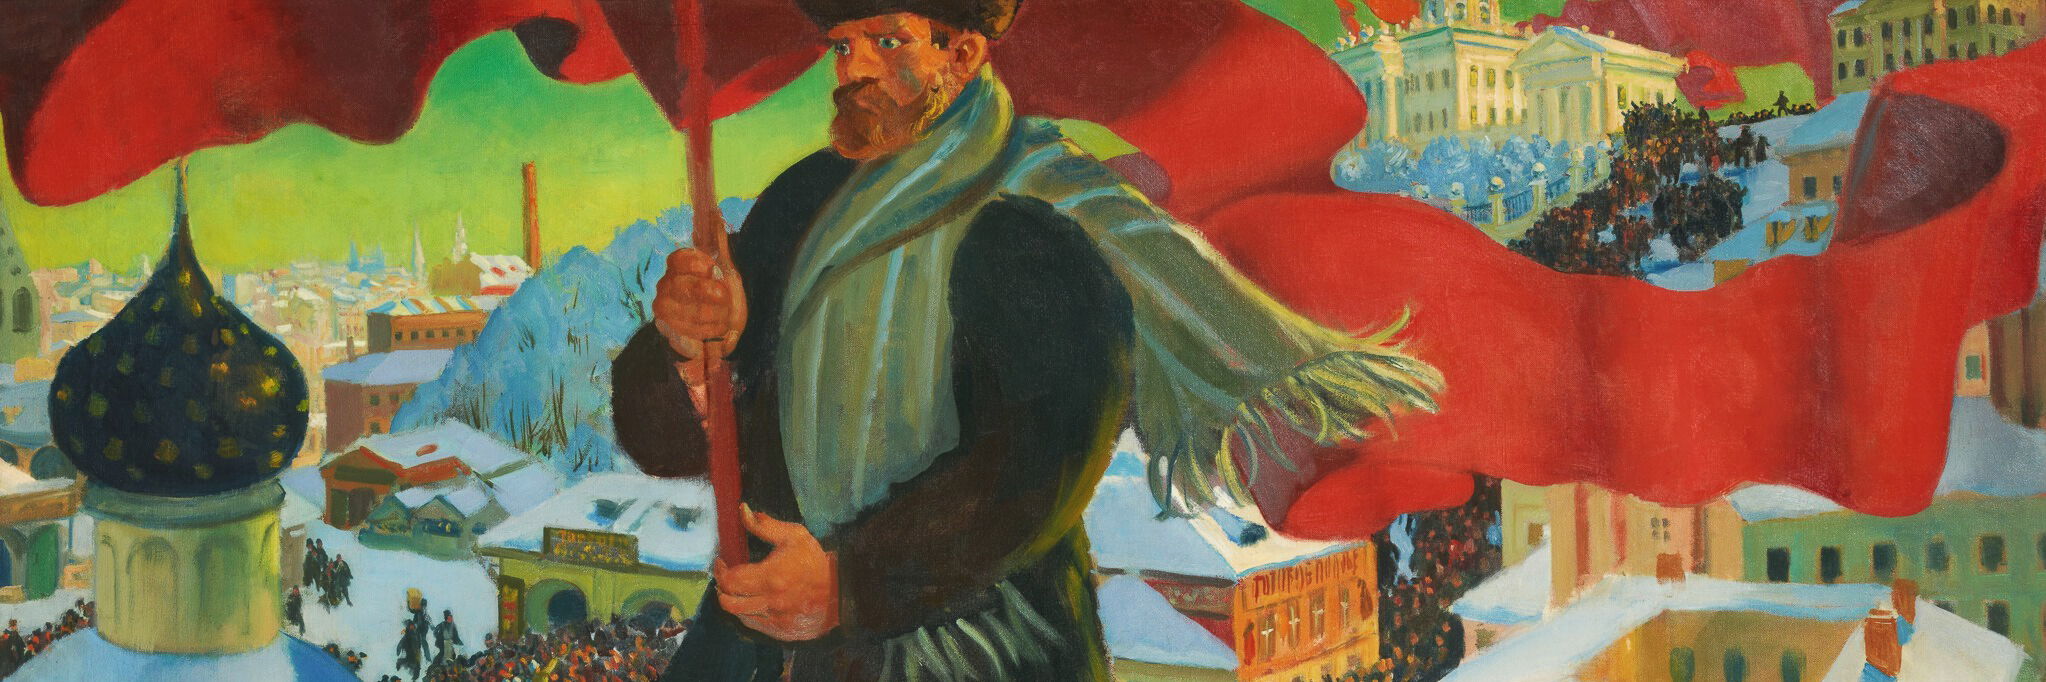 Boris Kustodijew, Der Bolschewik, 1920